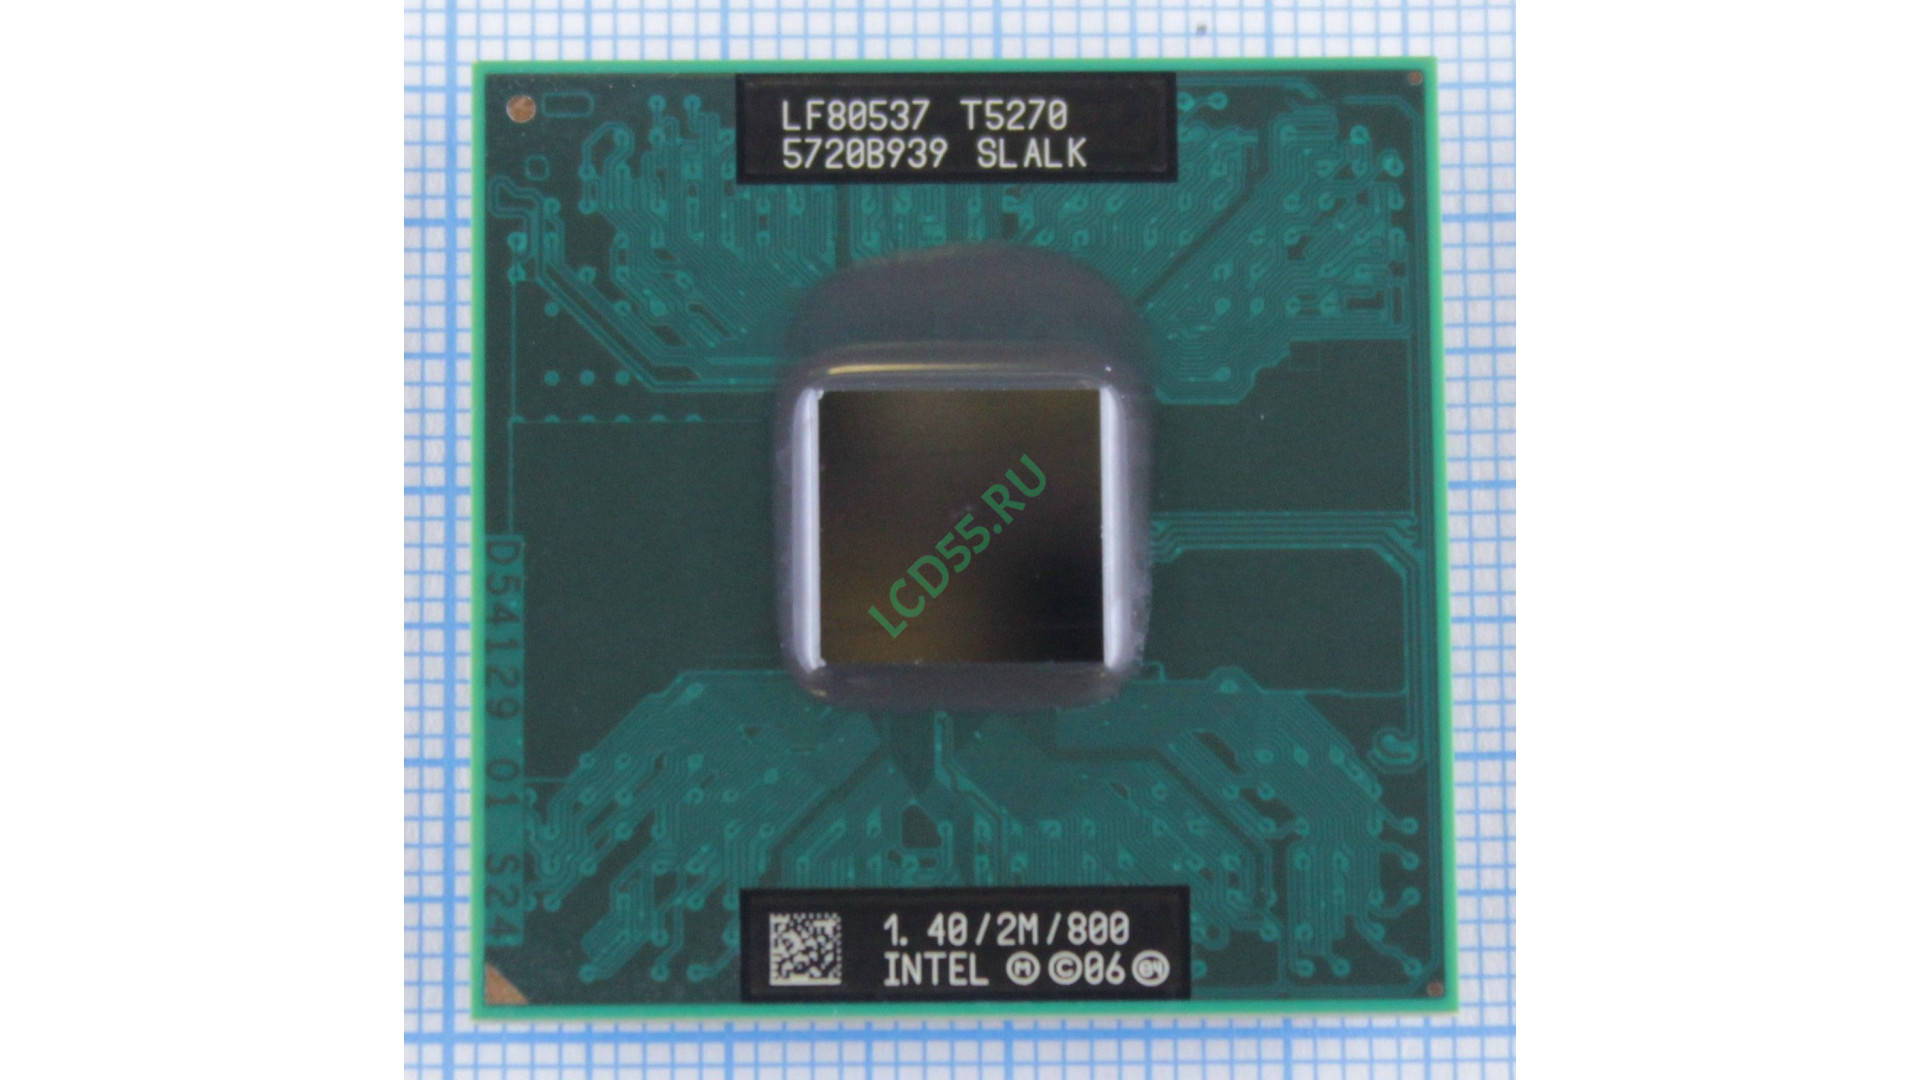 Intel T5270 SLALK